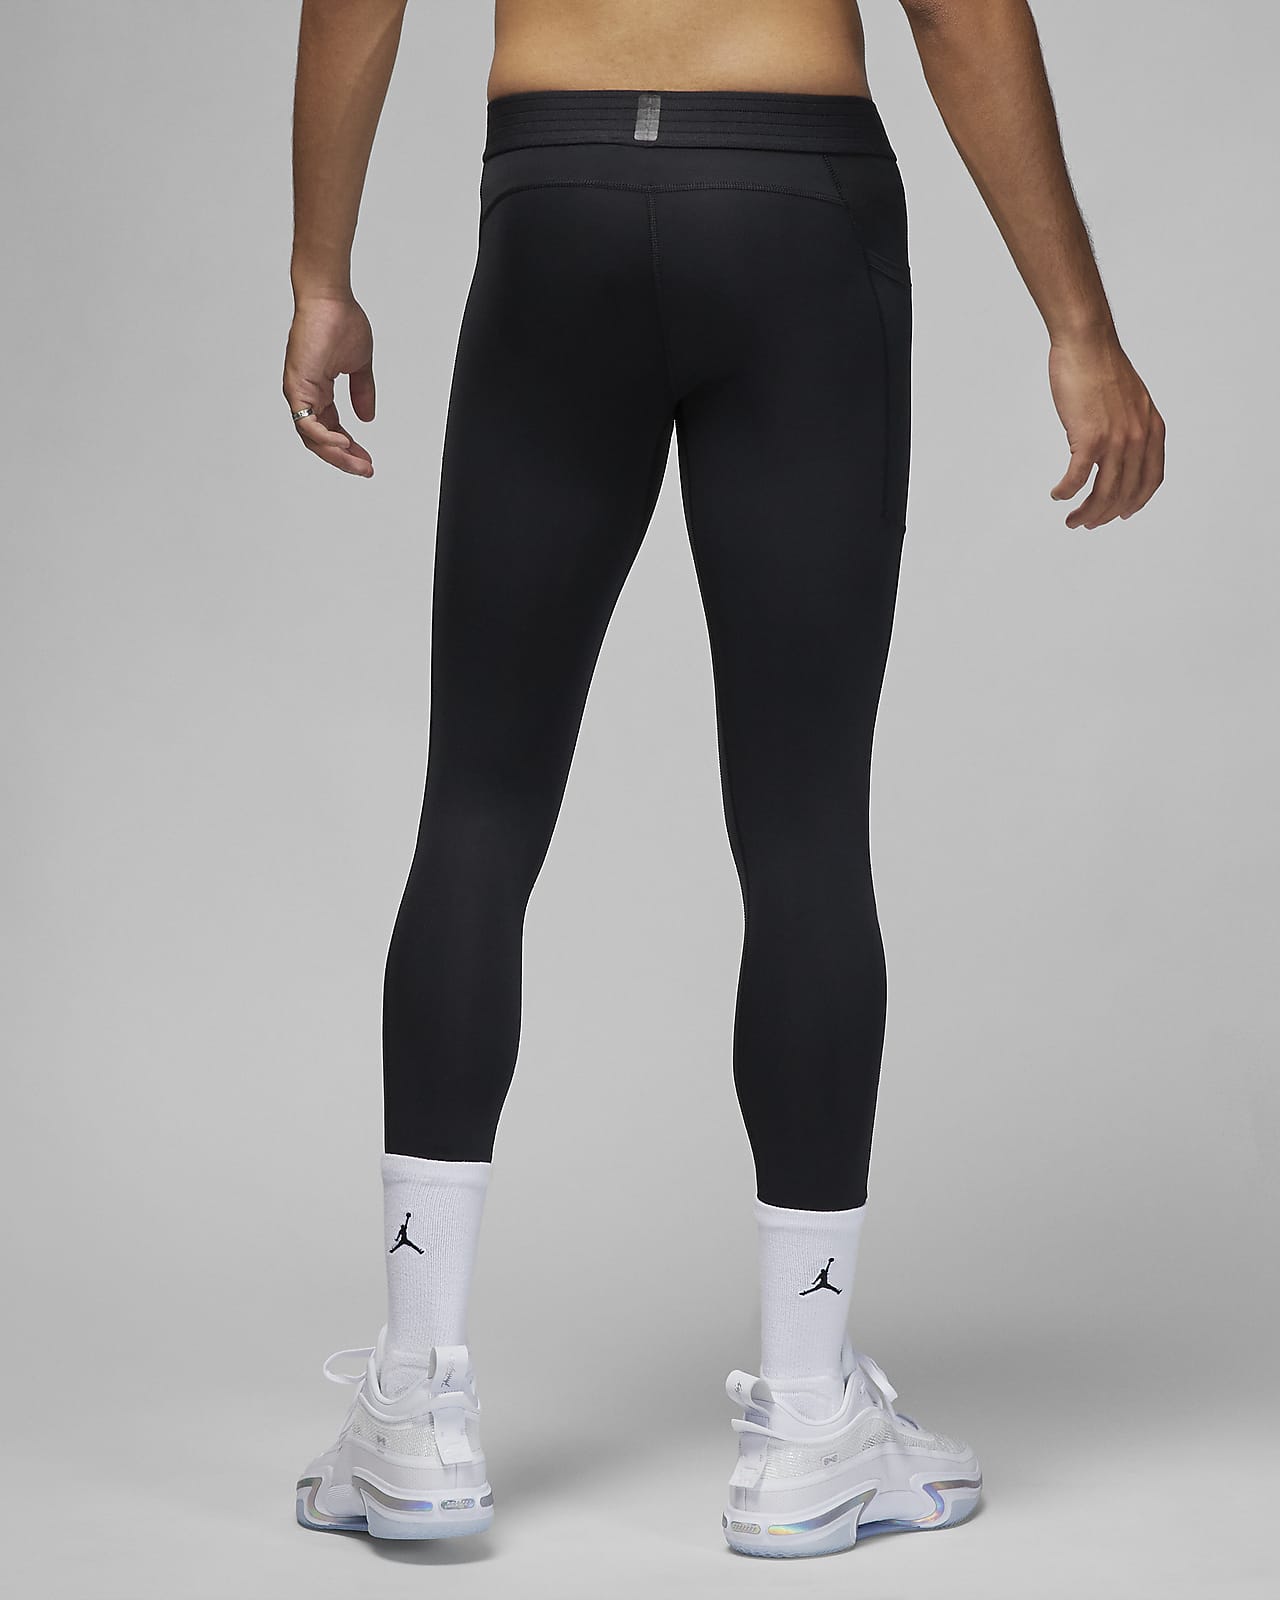 Nike NBA Player Mens Basketball 3/4 Compression Pants Tights Black